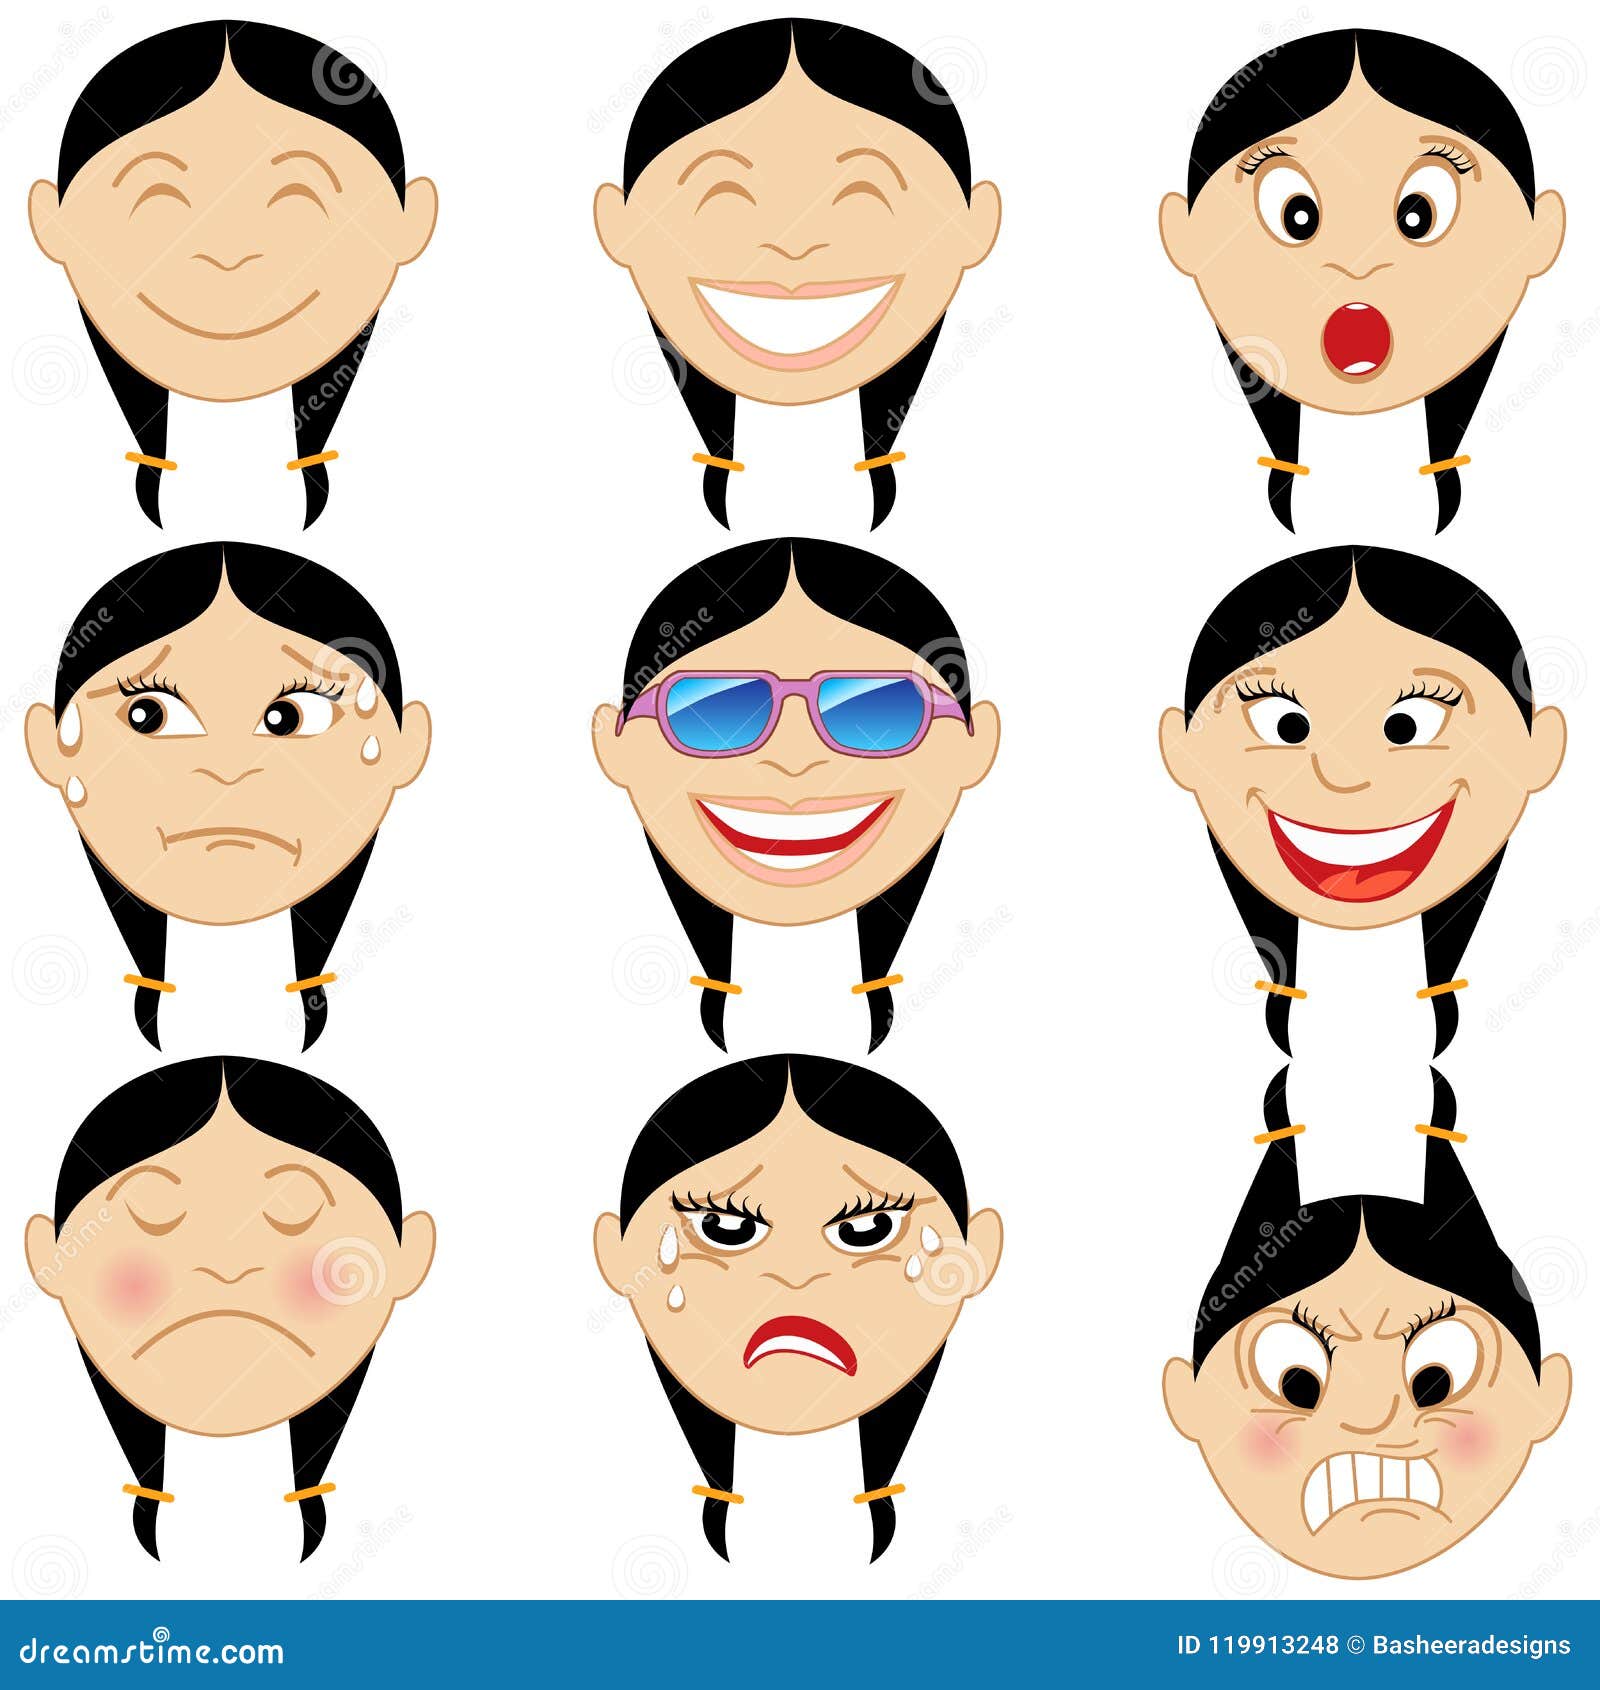 Chinese Girl Emoticon Emoji Stickers Stock Vector - Illustration of ...